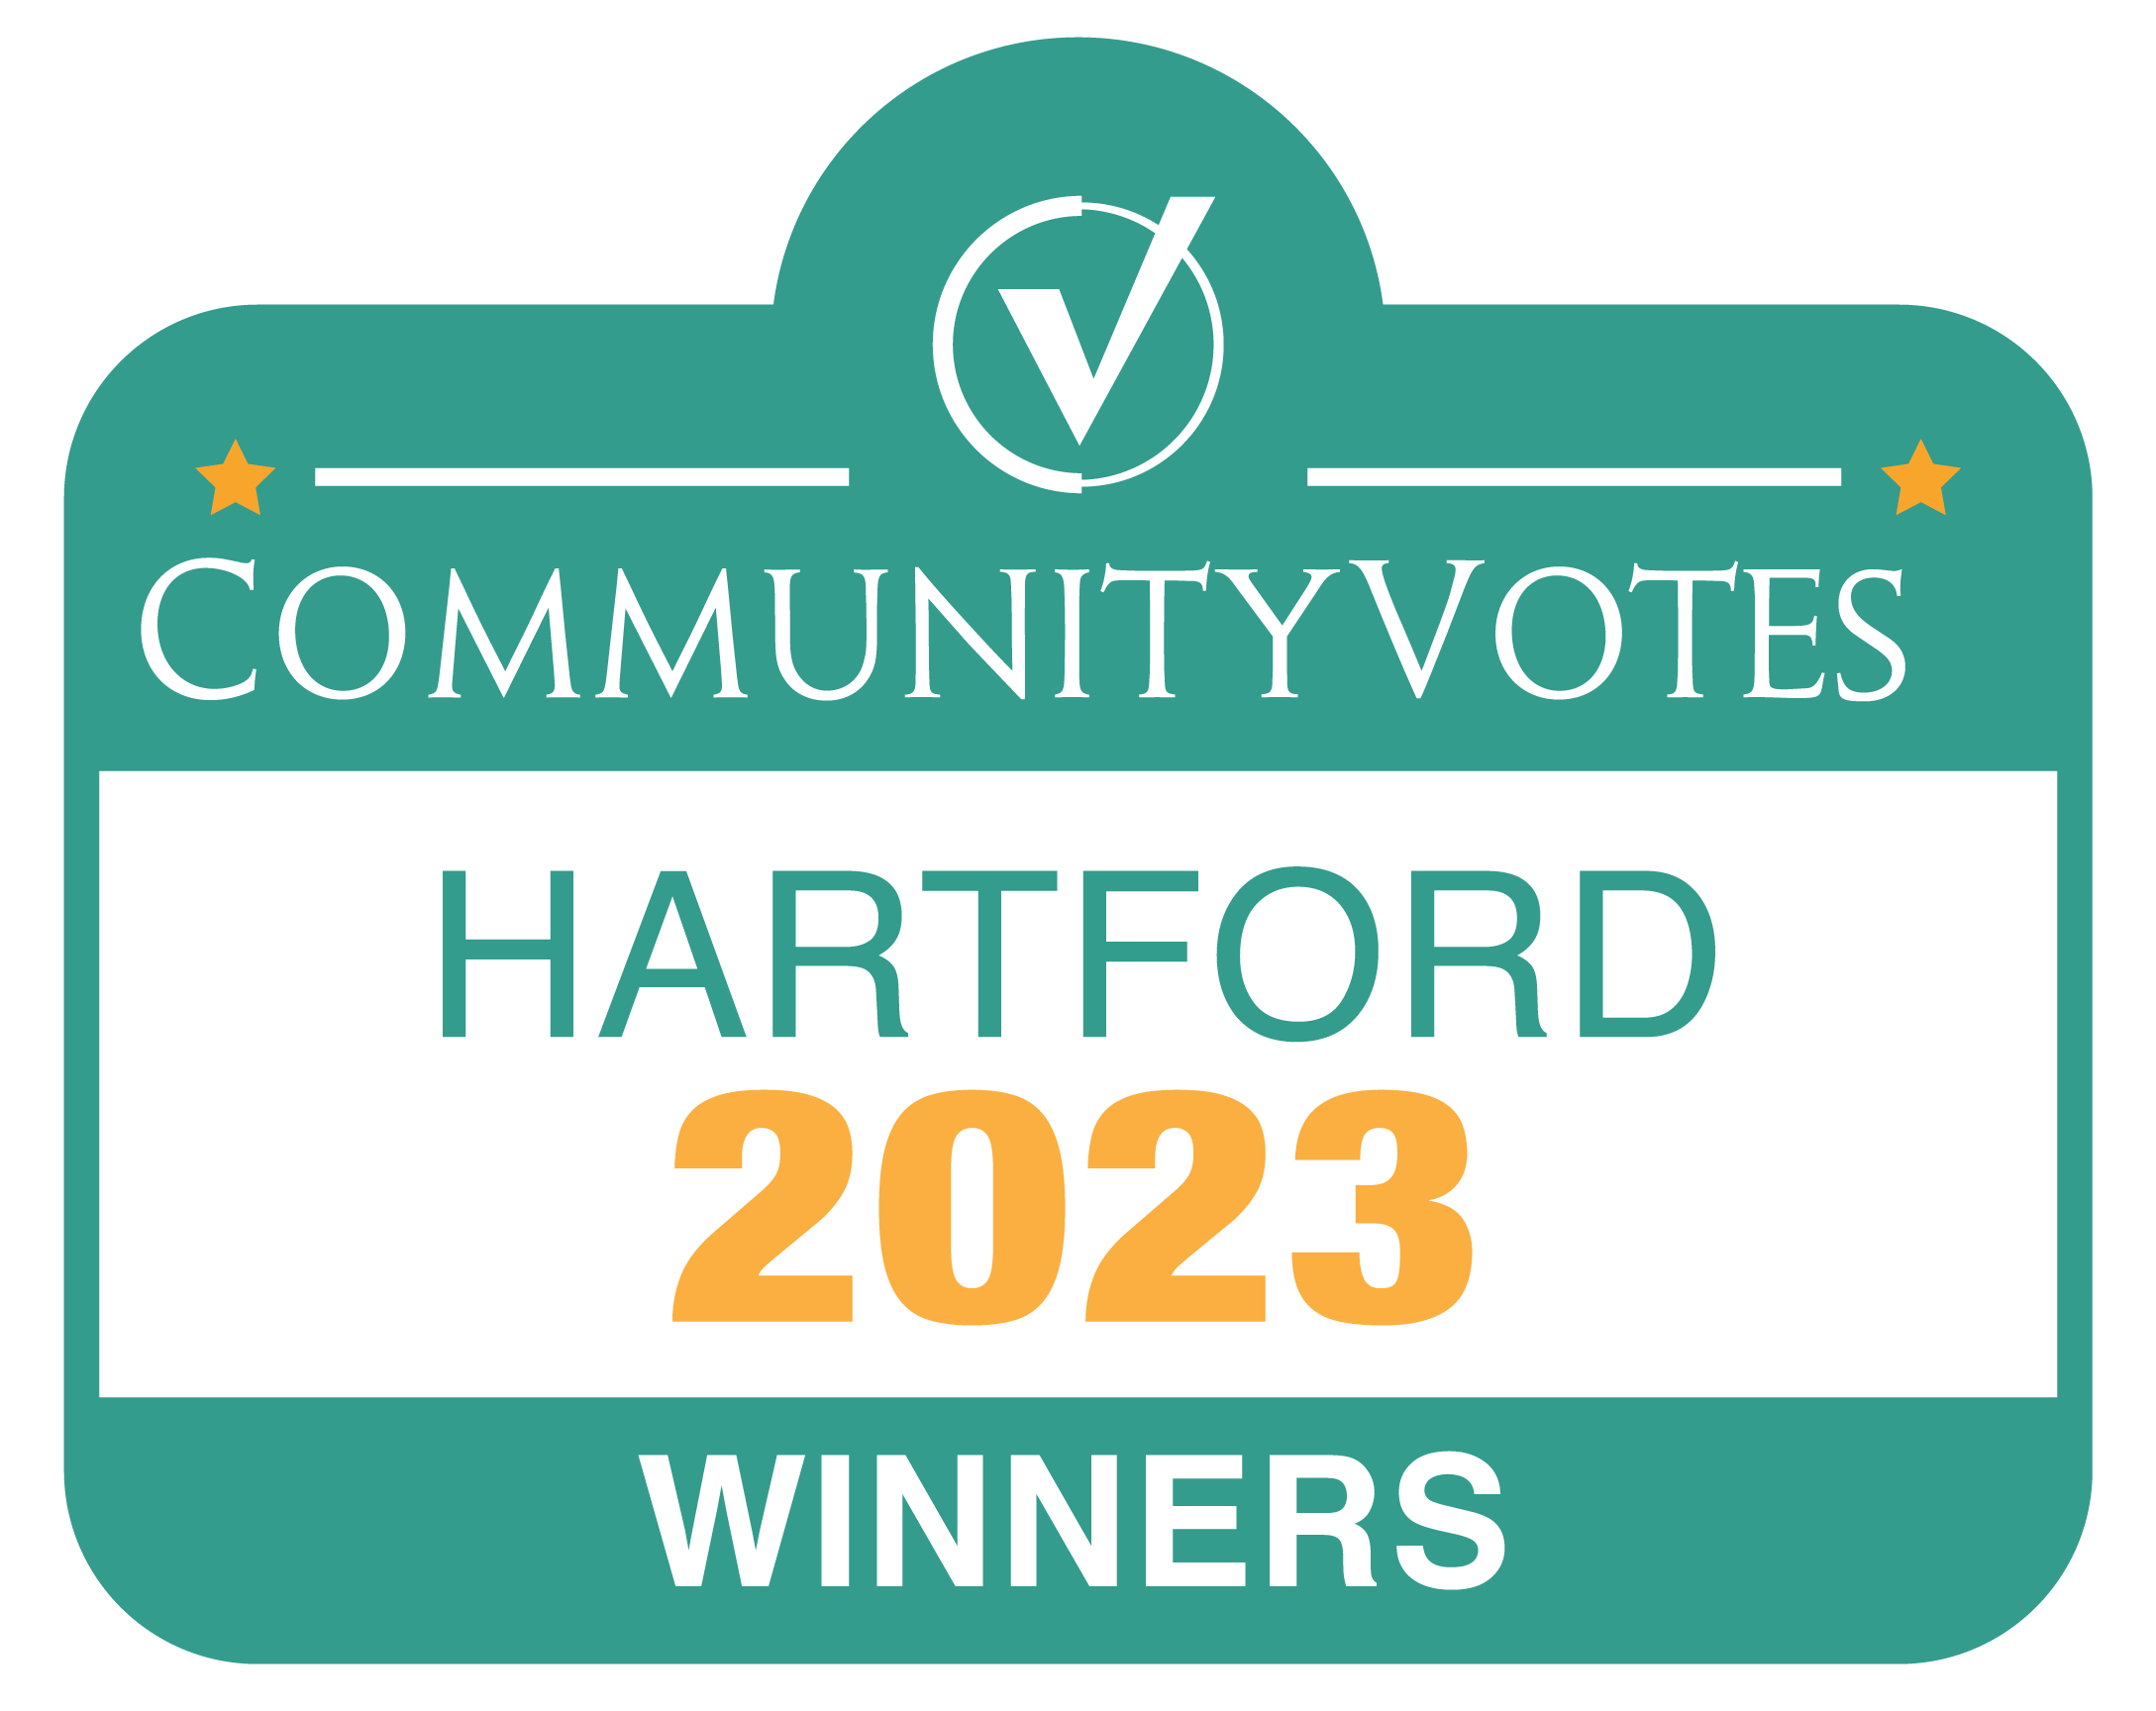 CommunityVotes Hartford 2023 Winners Logo